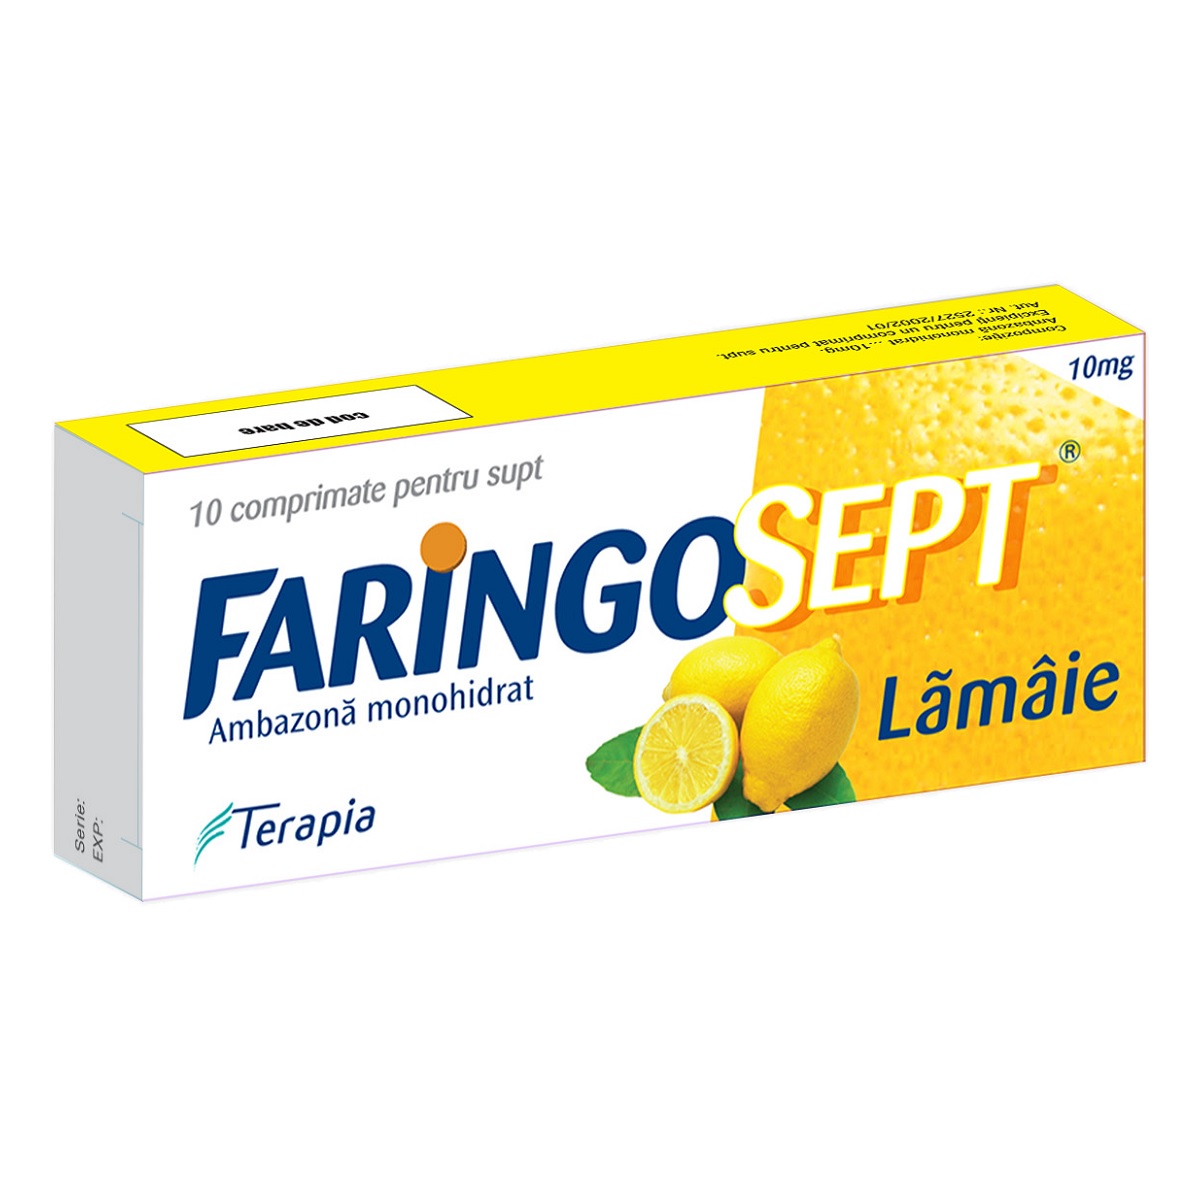 Faringosept Lamaie,10mg ,10 comprimate